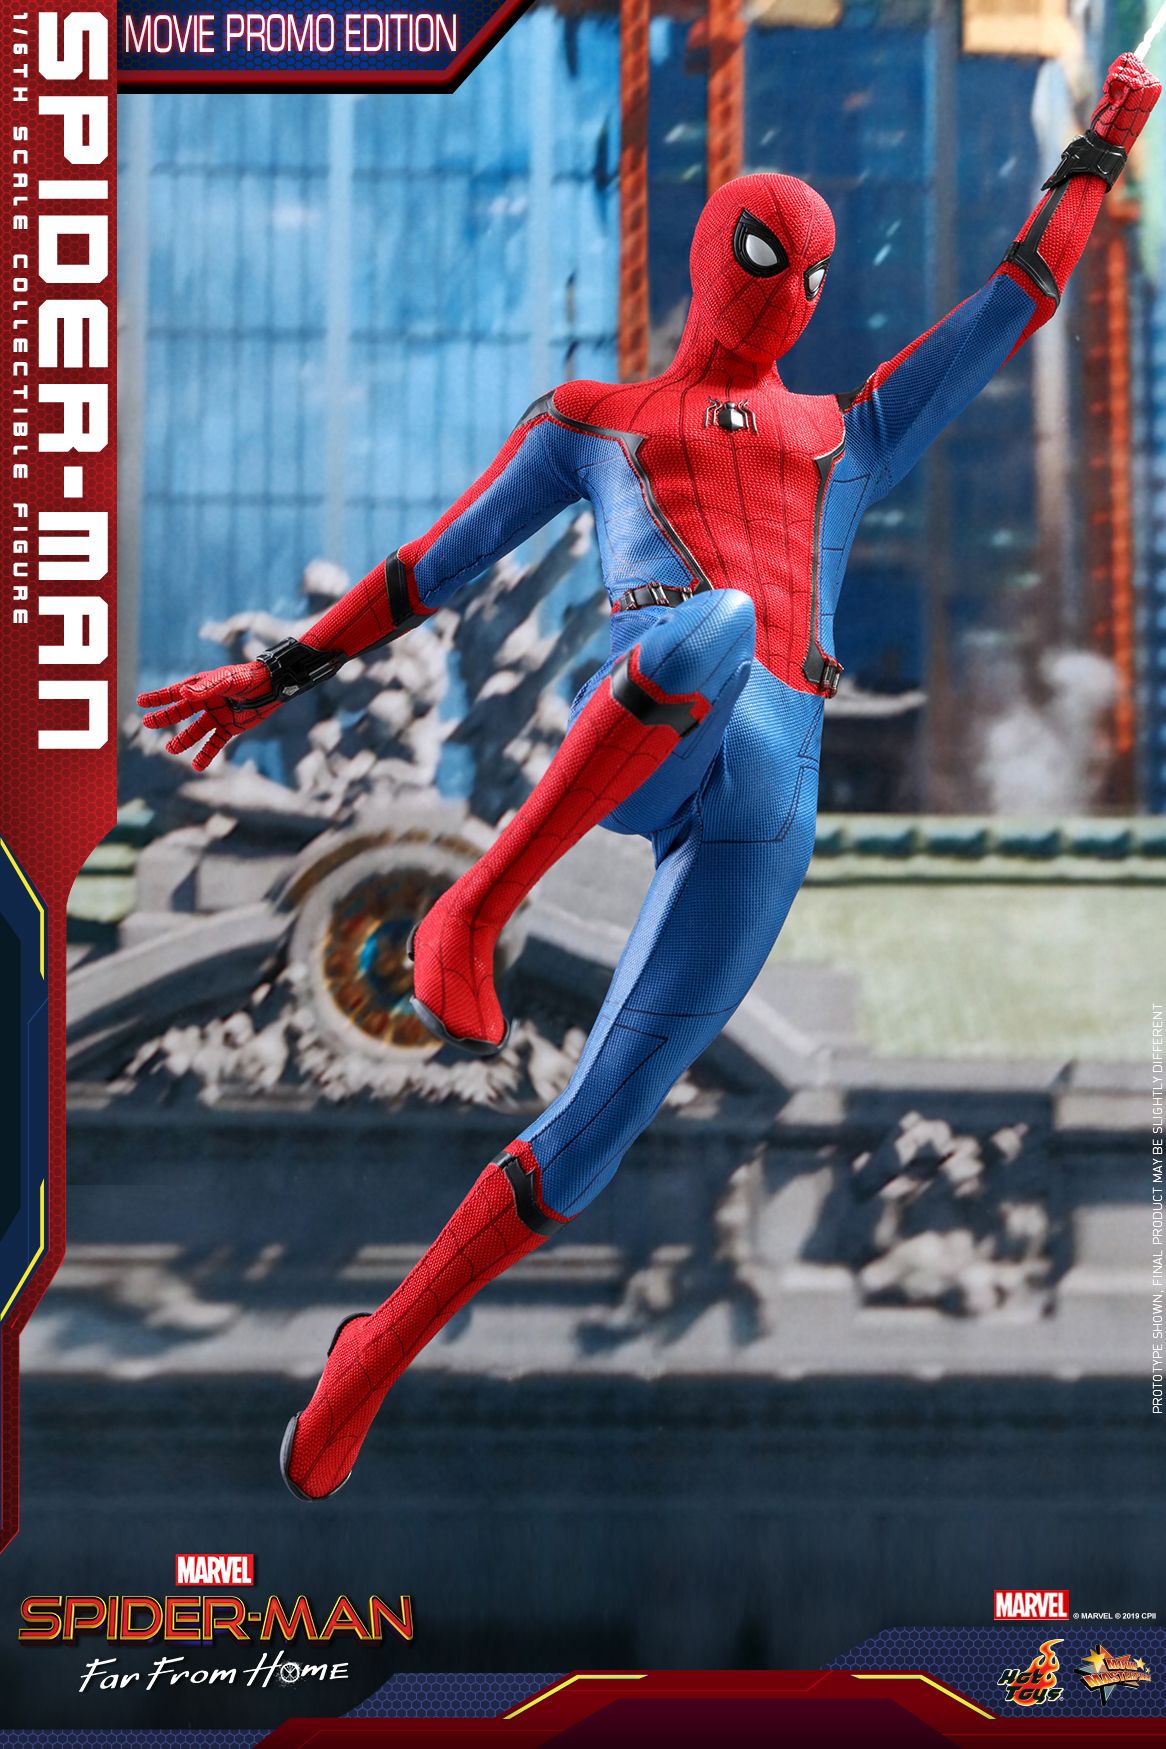 Hot Toys Smffh Spider Man Movie Promo Edition Collectible Figure_pr3